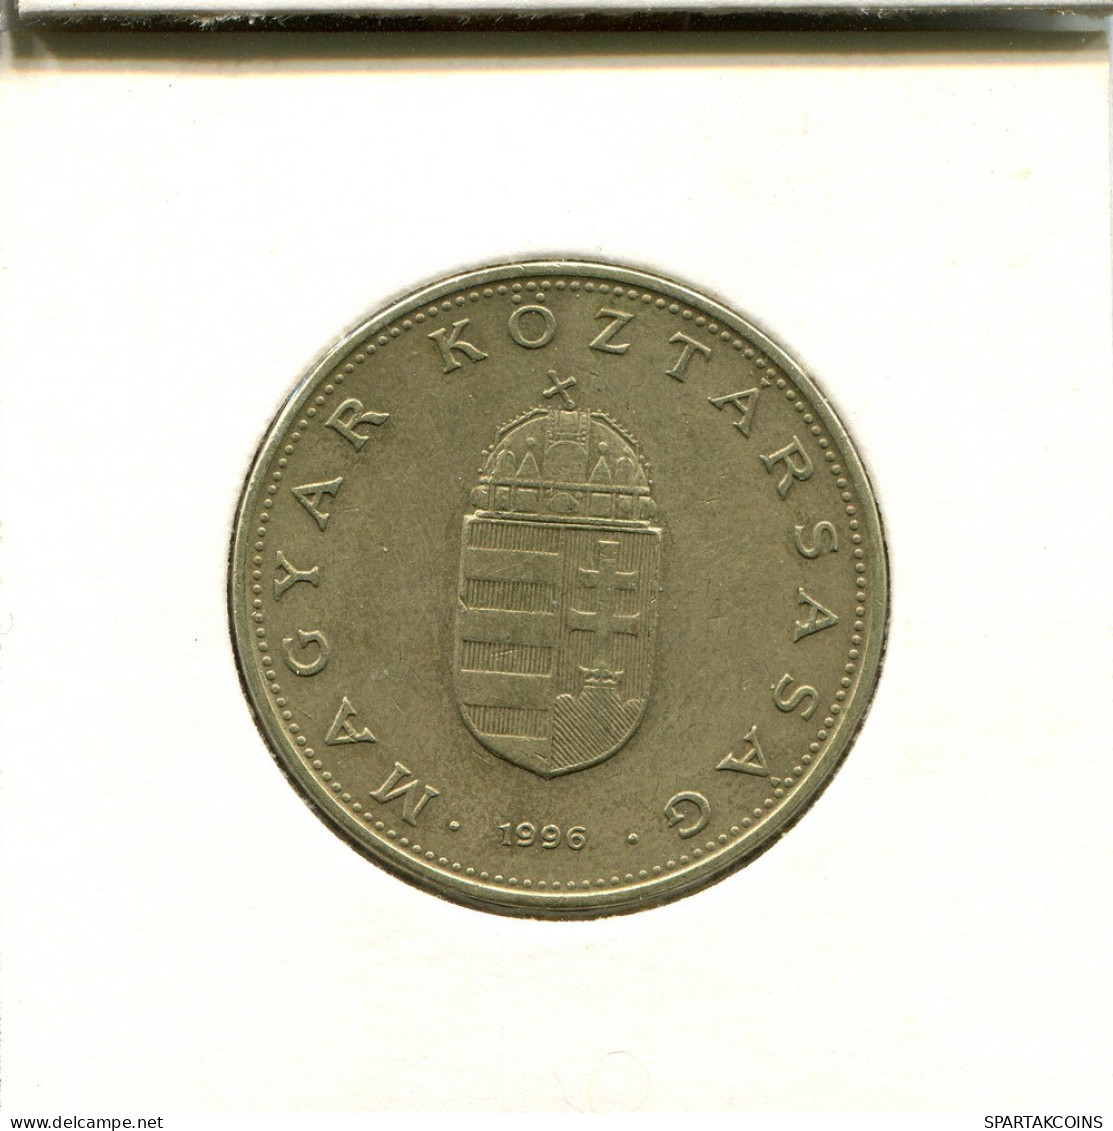 100 FORINT 1996 HUNGARY Coin #AS916.U.A - Hungary